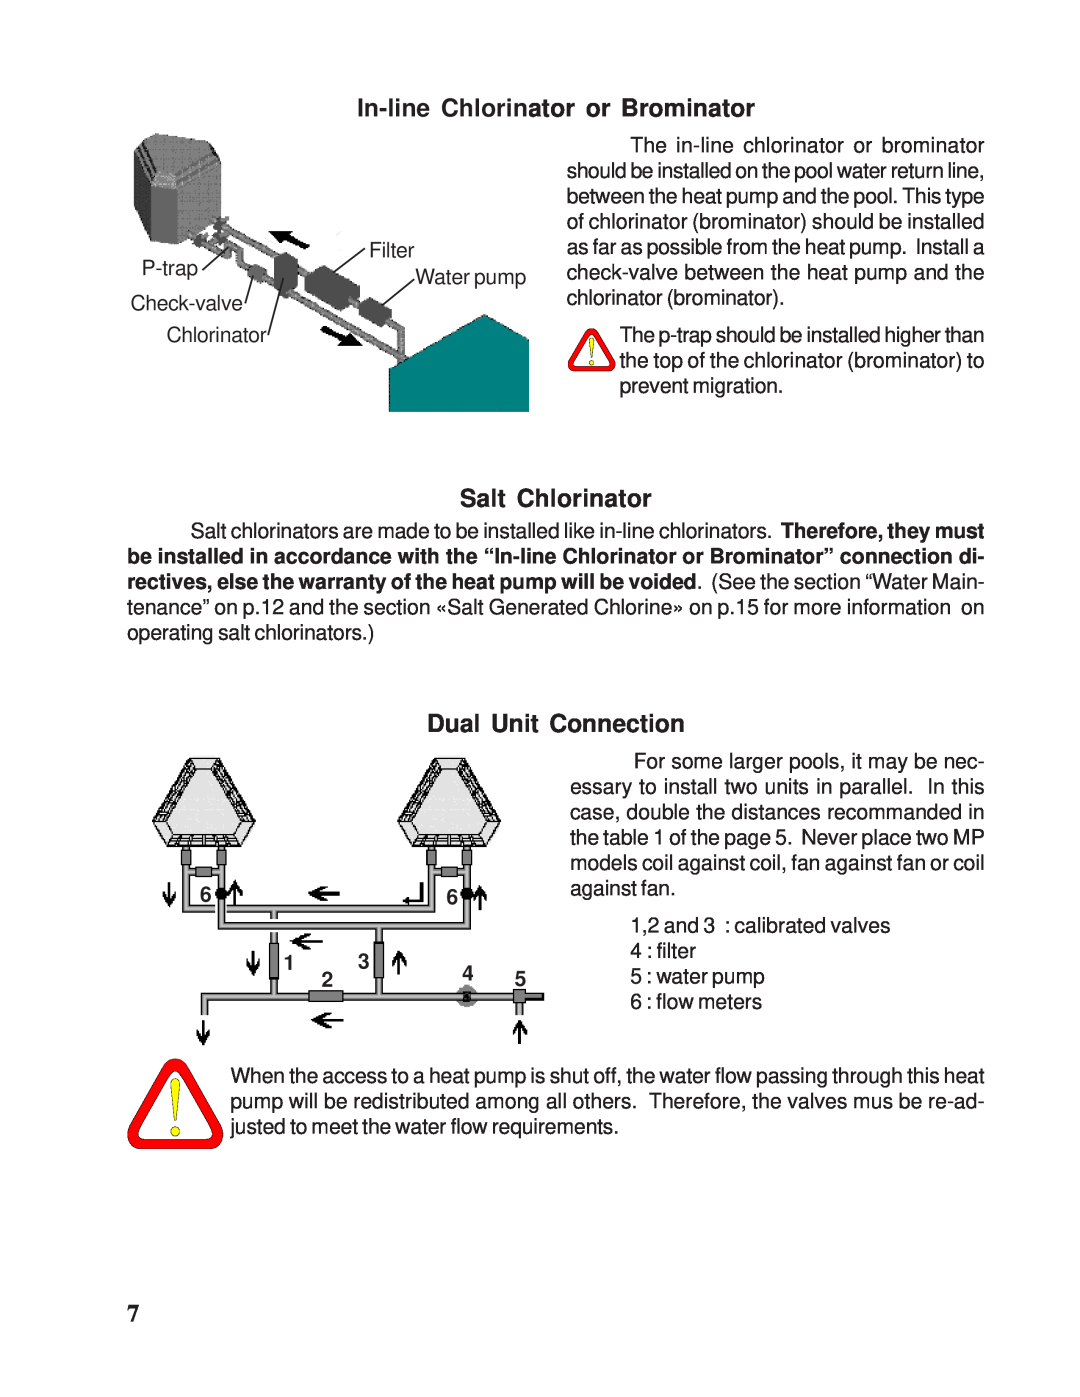 Taylor Pool Heat Pump owner manual In-line Chlorinator or Brominator, Salt Chlorinator, Dual Unit Connection 